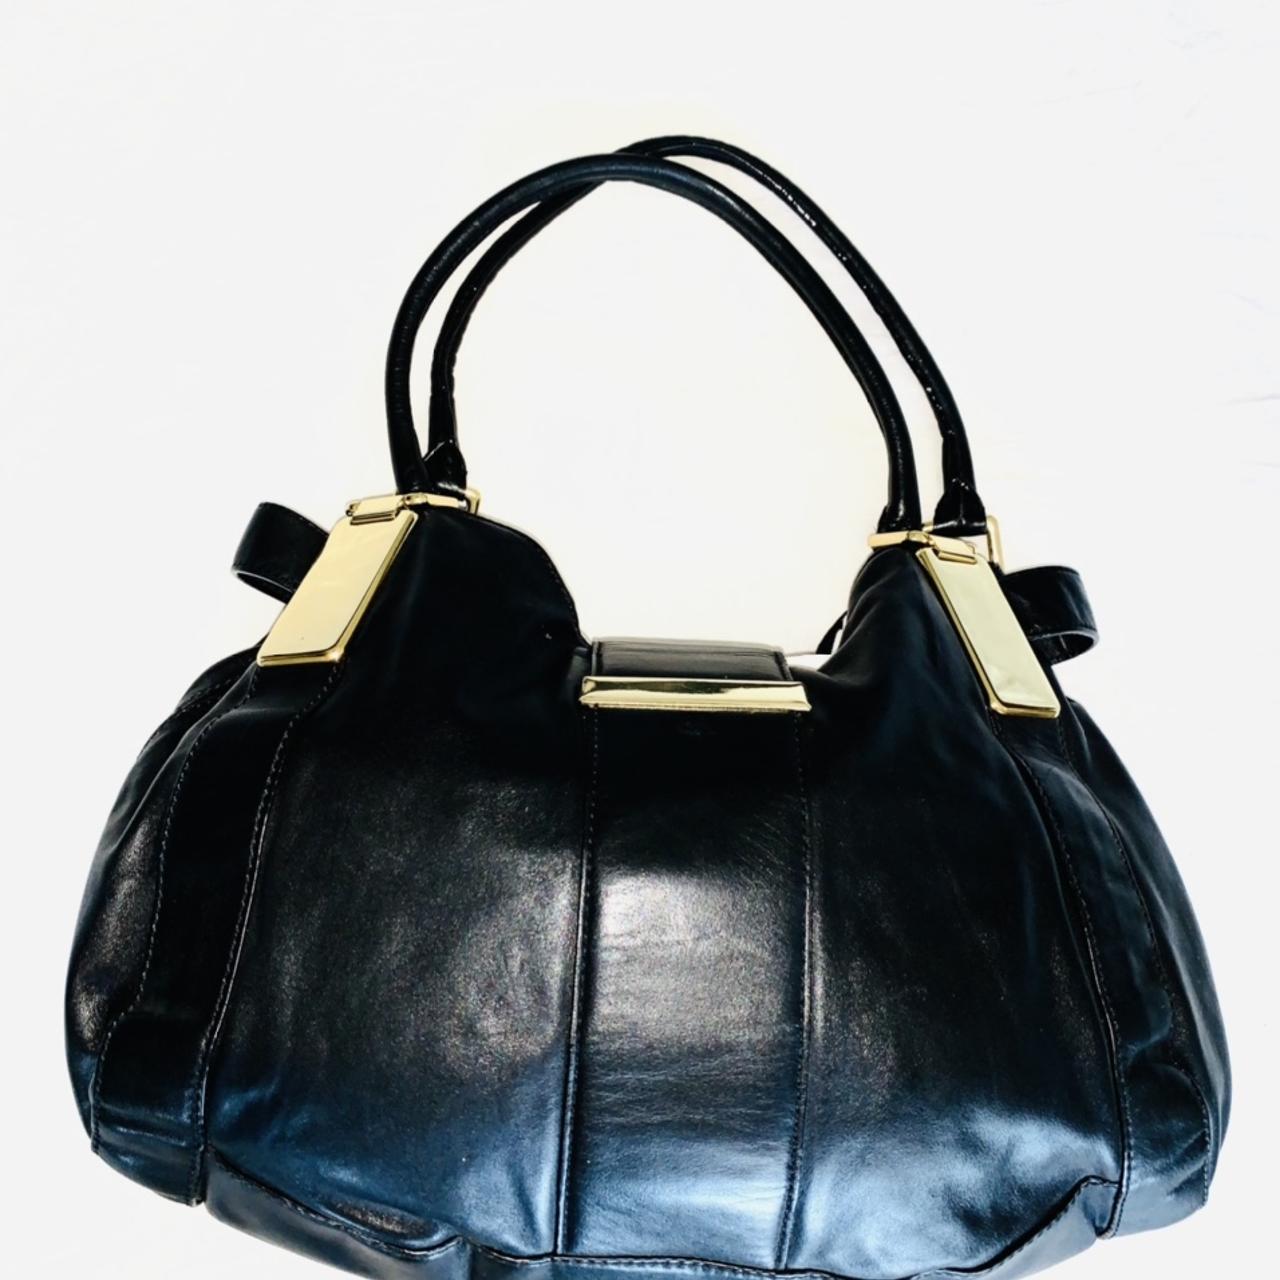 New Jimmy Choo Cheri Dark Blue Leather Top Handle Bag OSQM | 028 -  Walmart.com